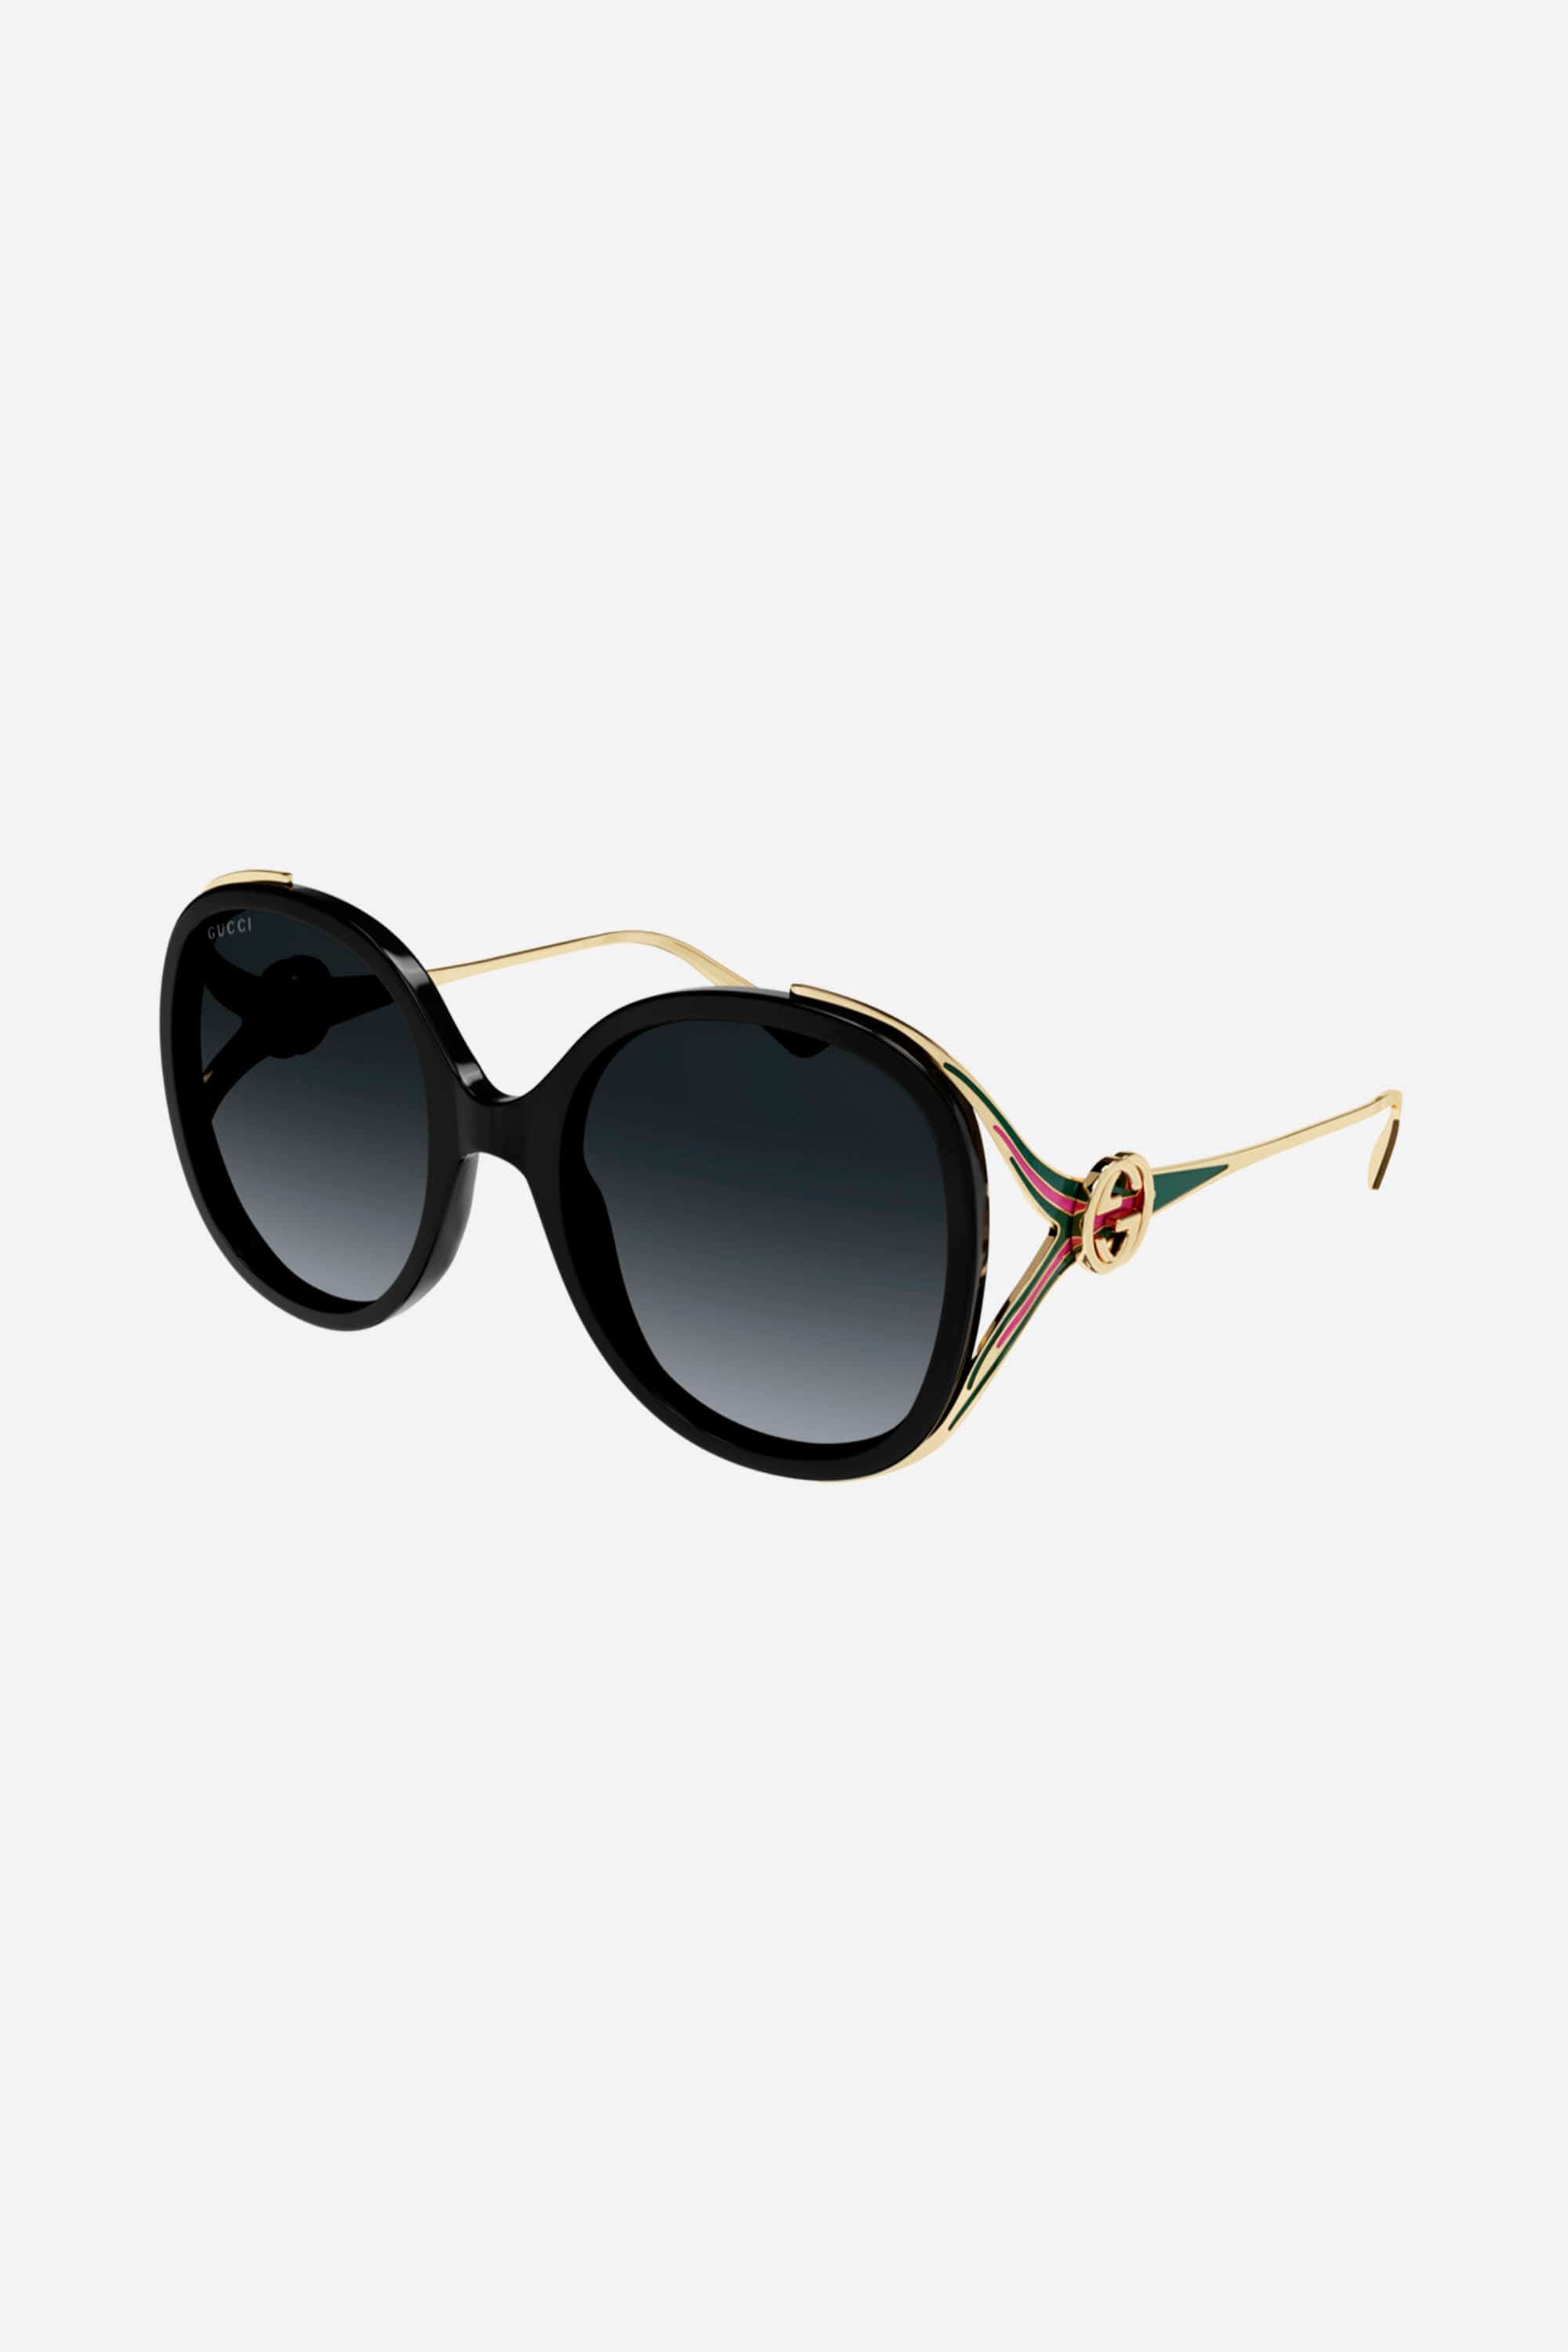 Gucci fork acetate black sunglasses - Eyewear Club